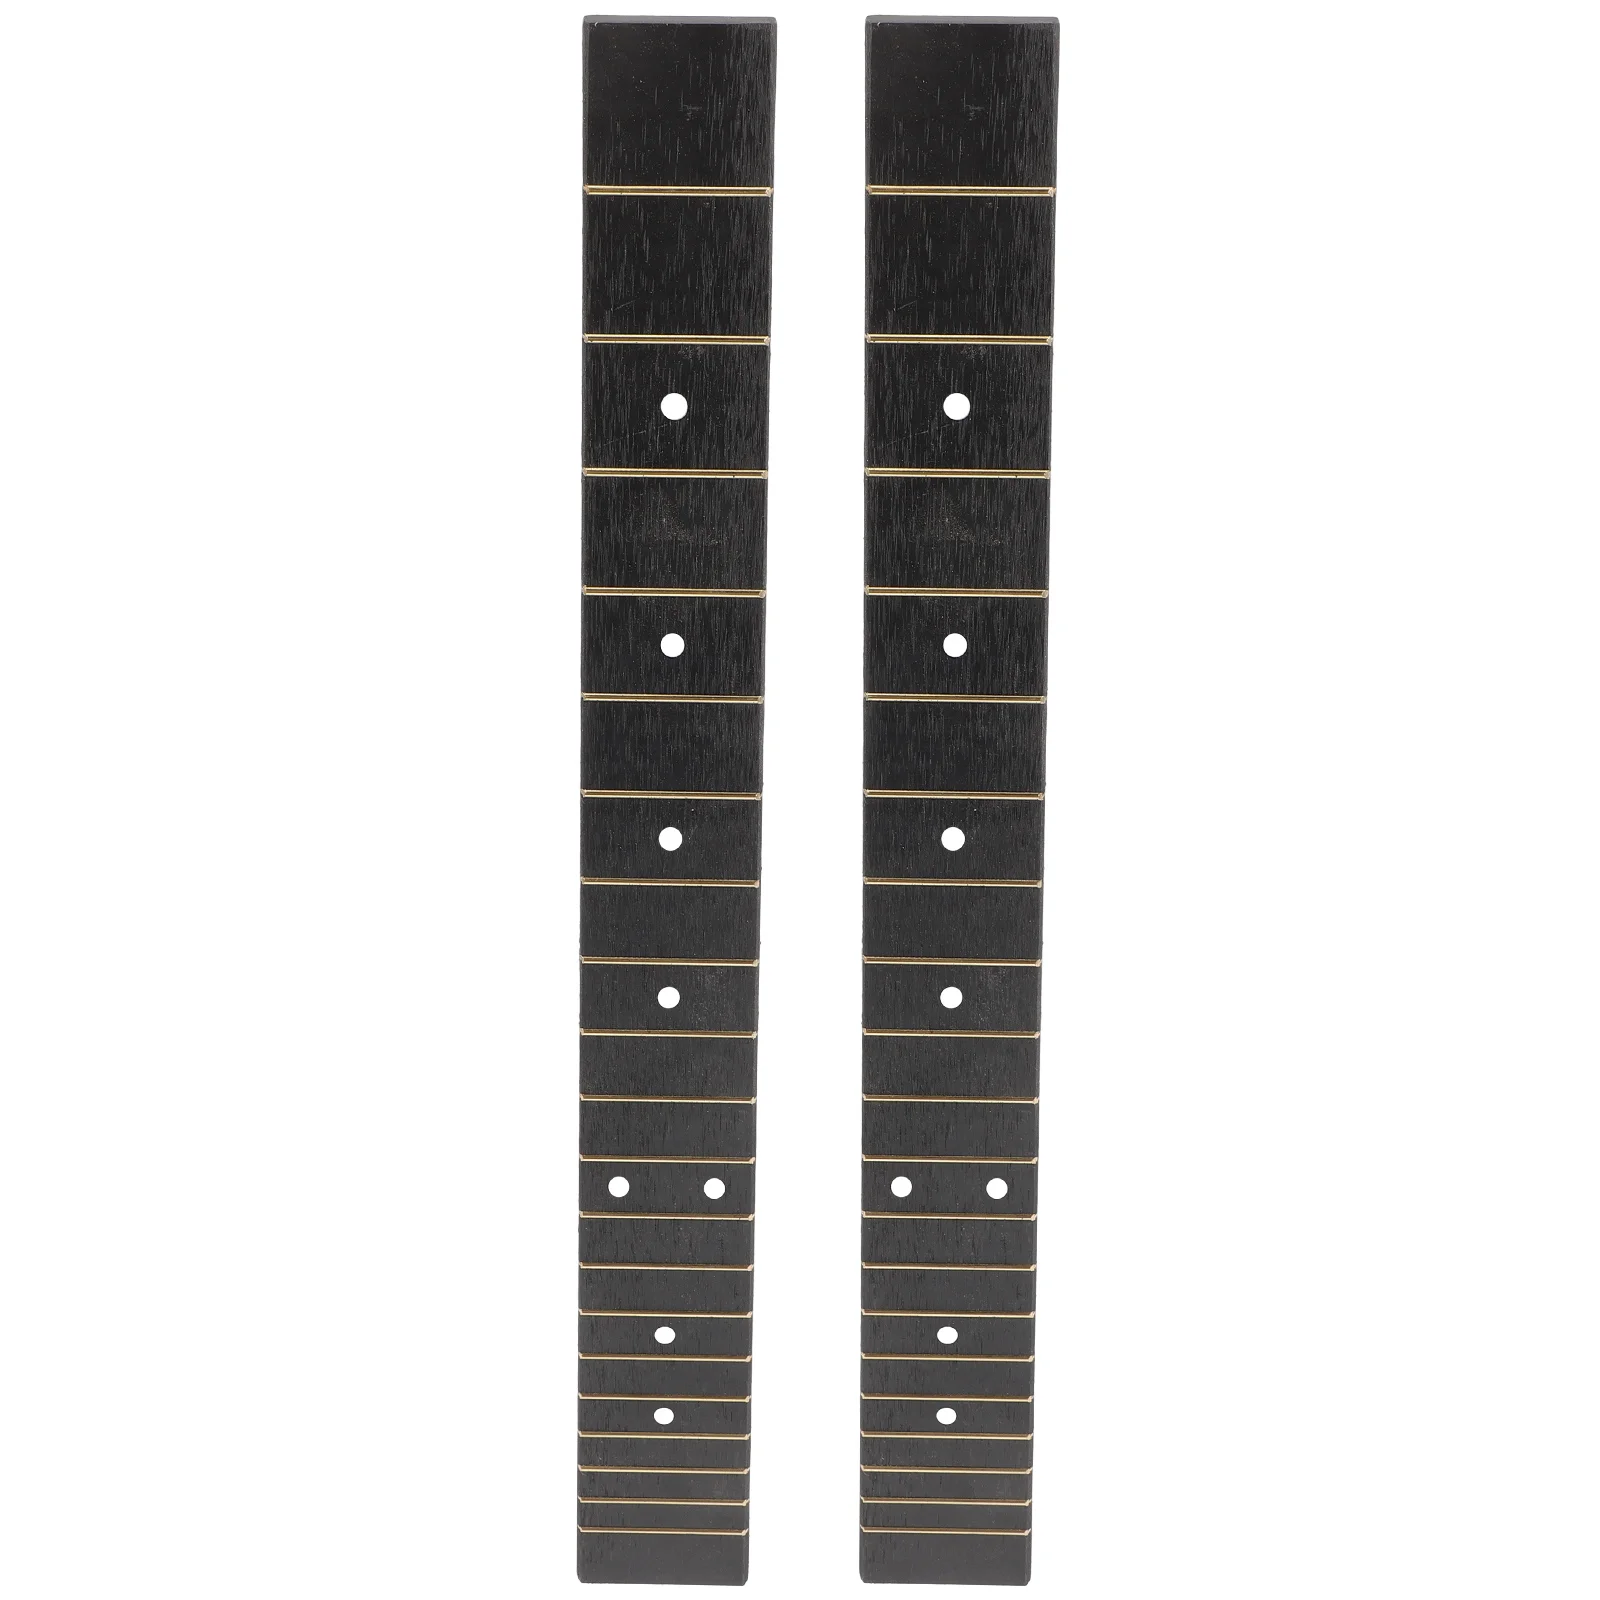 

2 Pcs Guitar Accessory Fret Board Guitars Fretboard Replacement Parts Rosewood ABS Fingerboard Folk